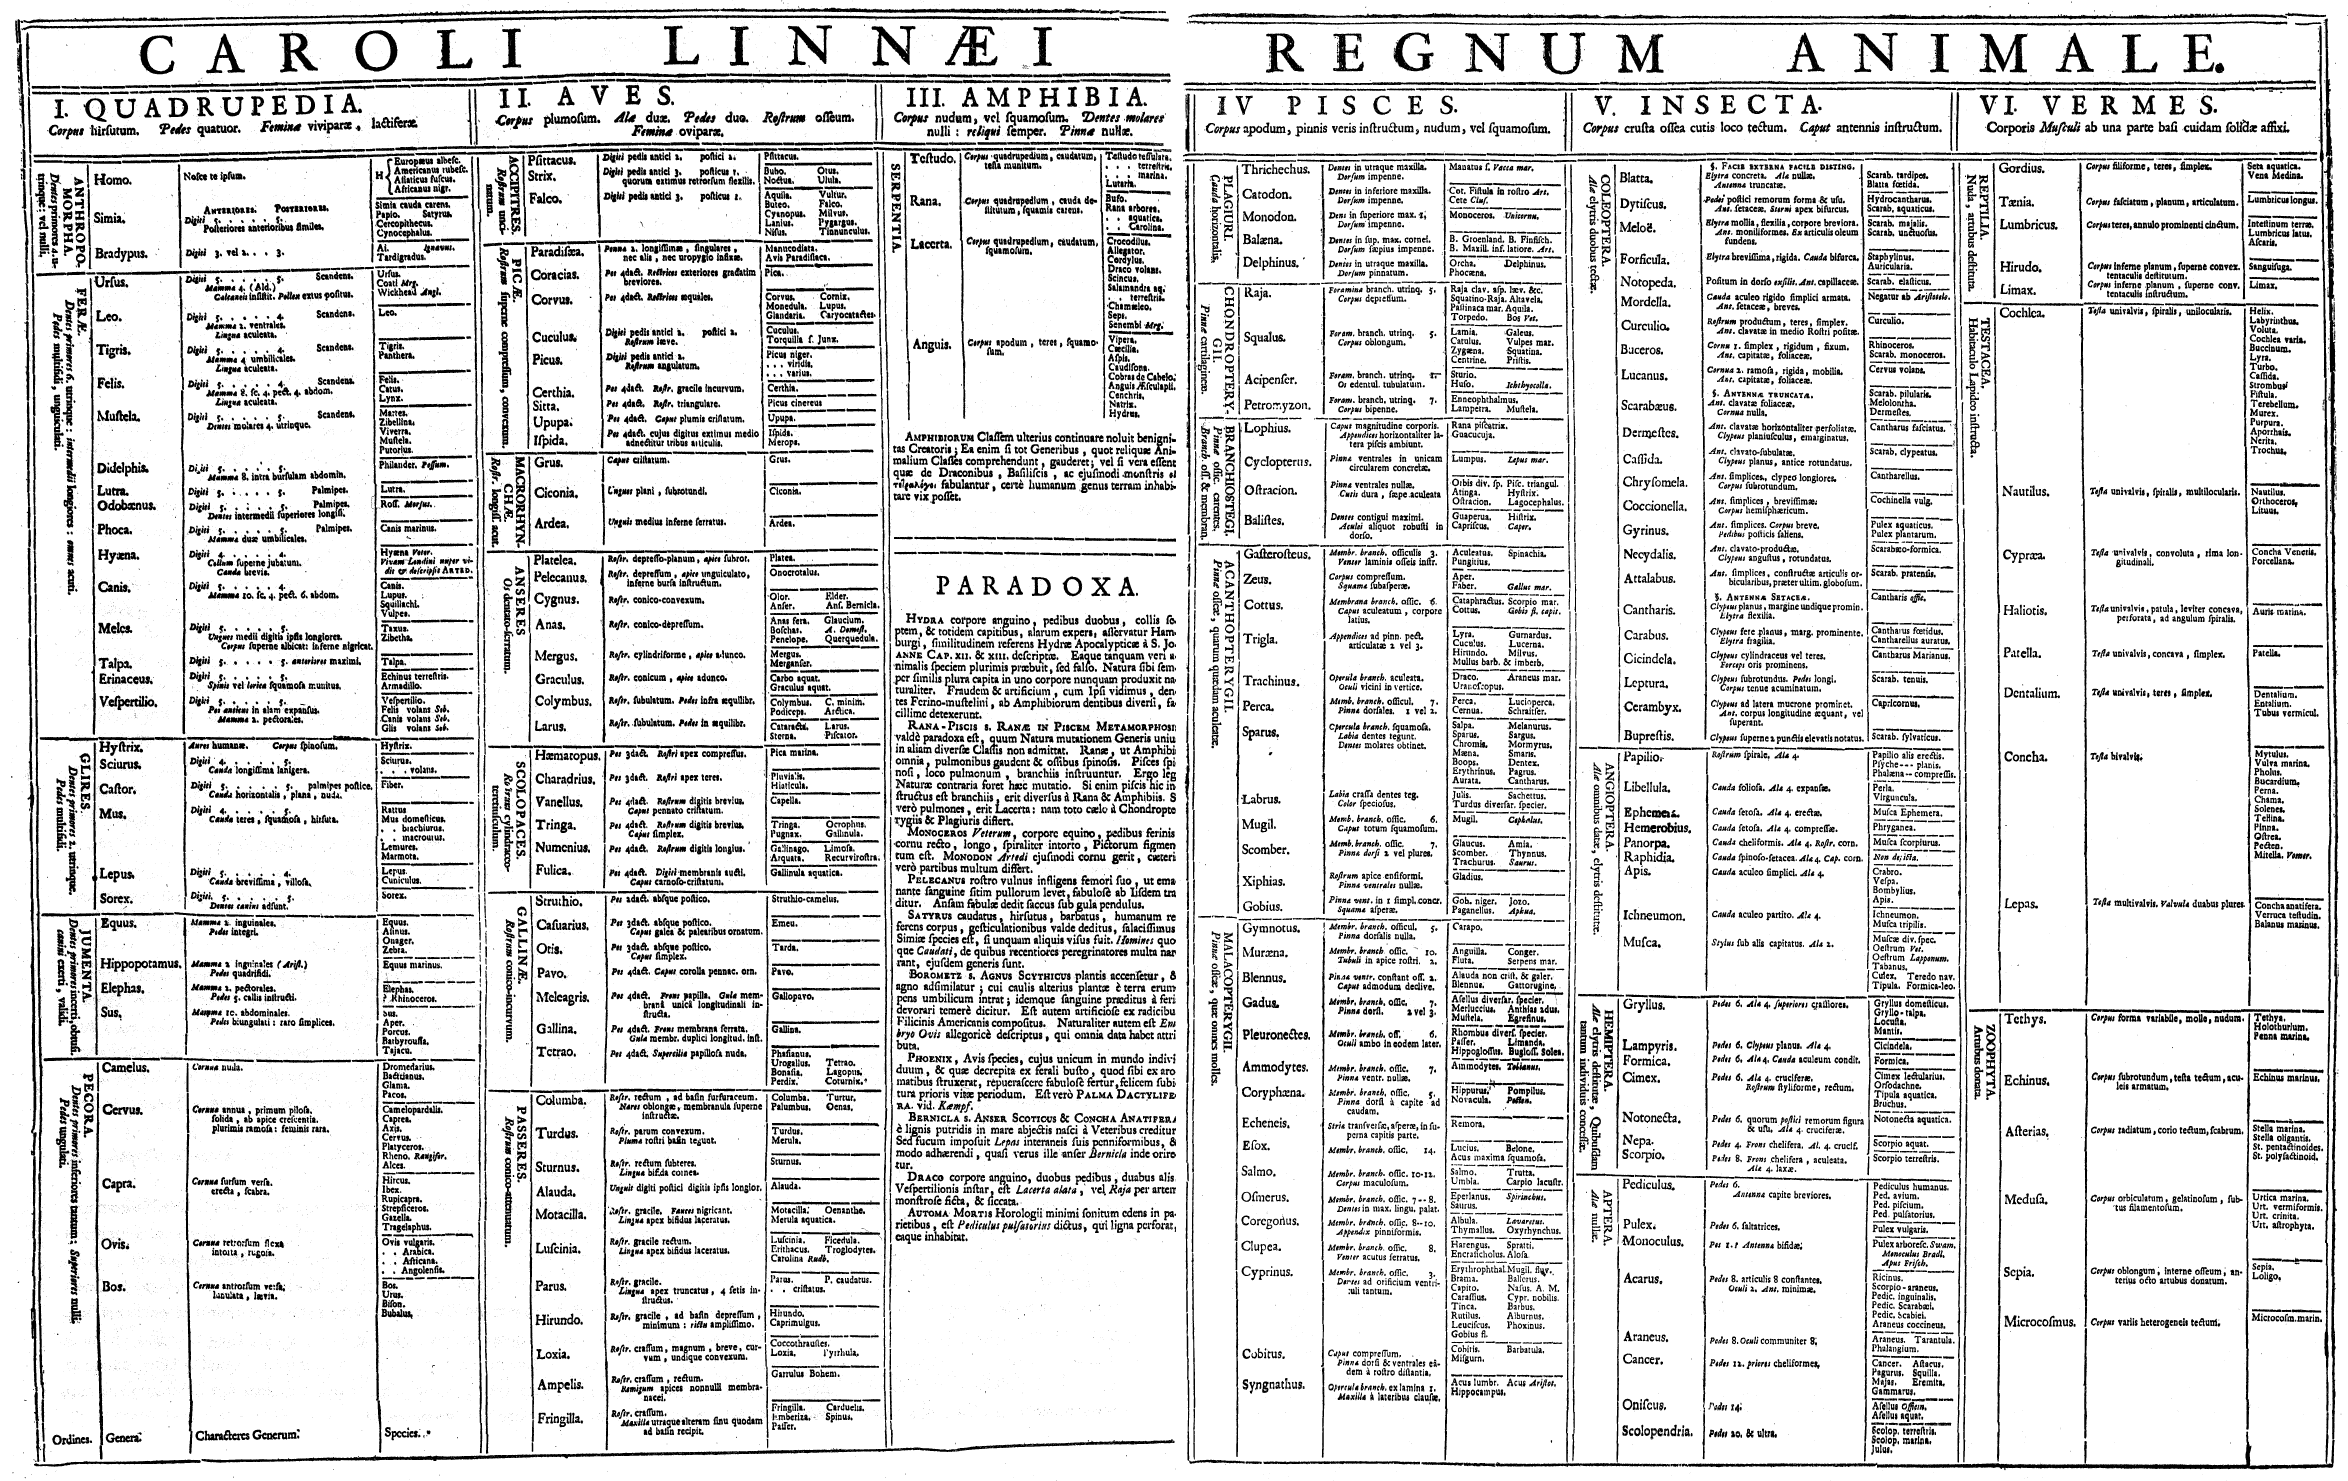 Gigantic taxonomy of living organisms by Carl Linnaeus